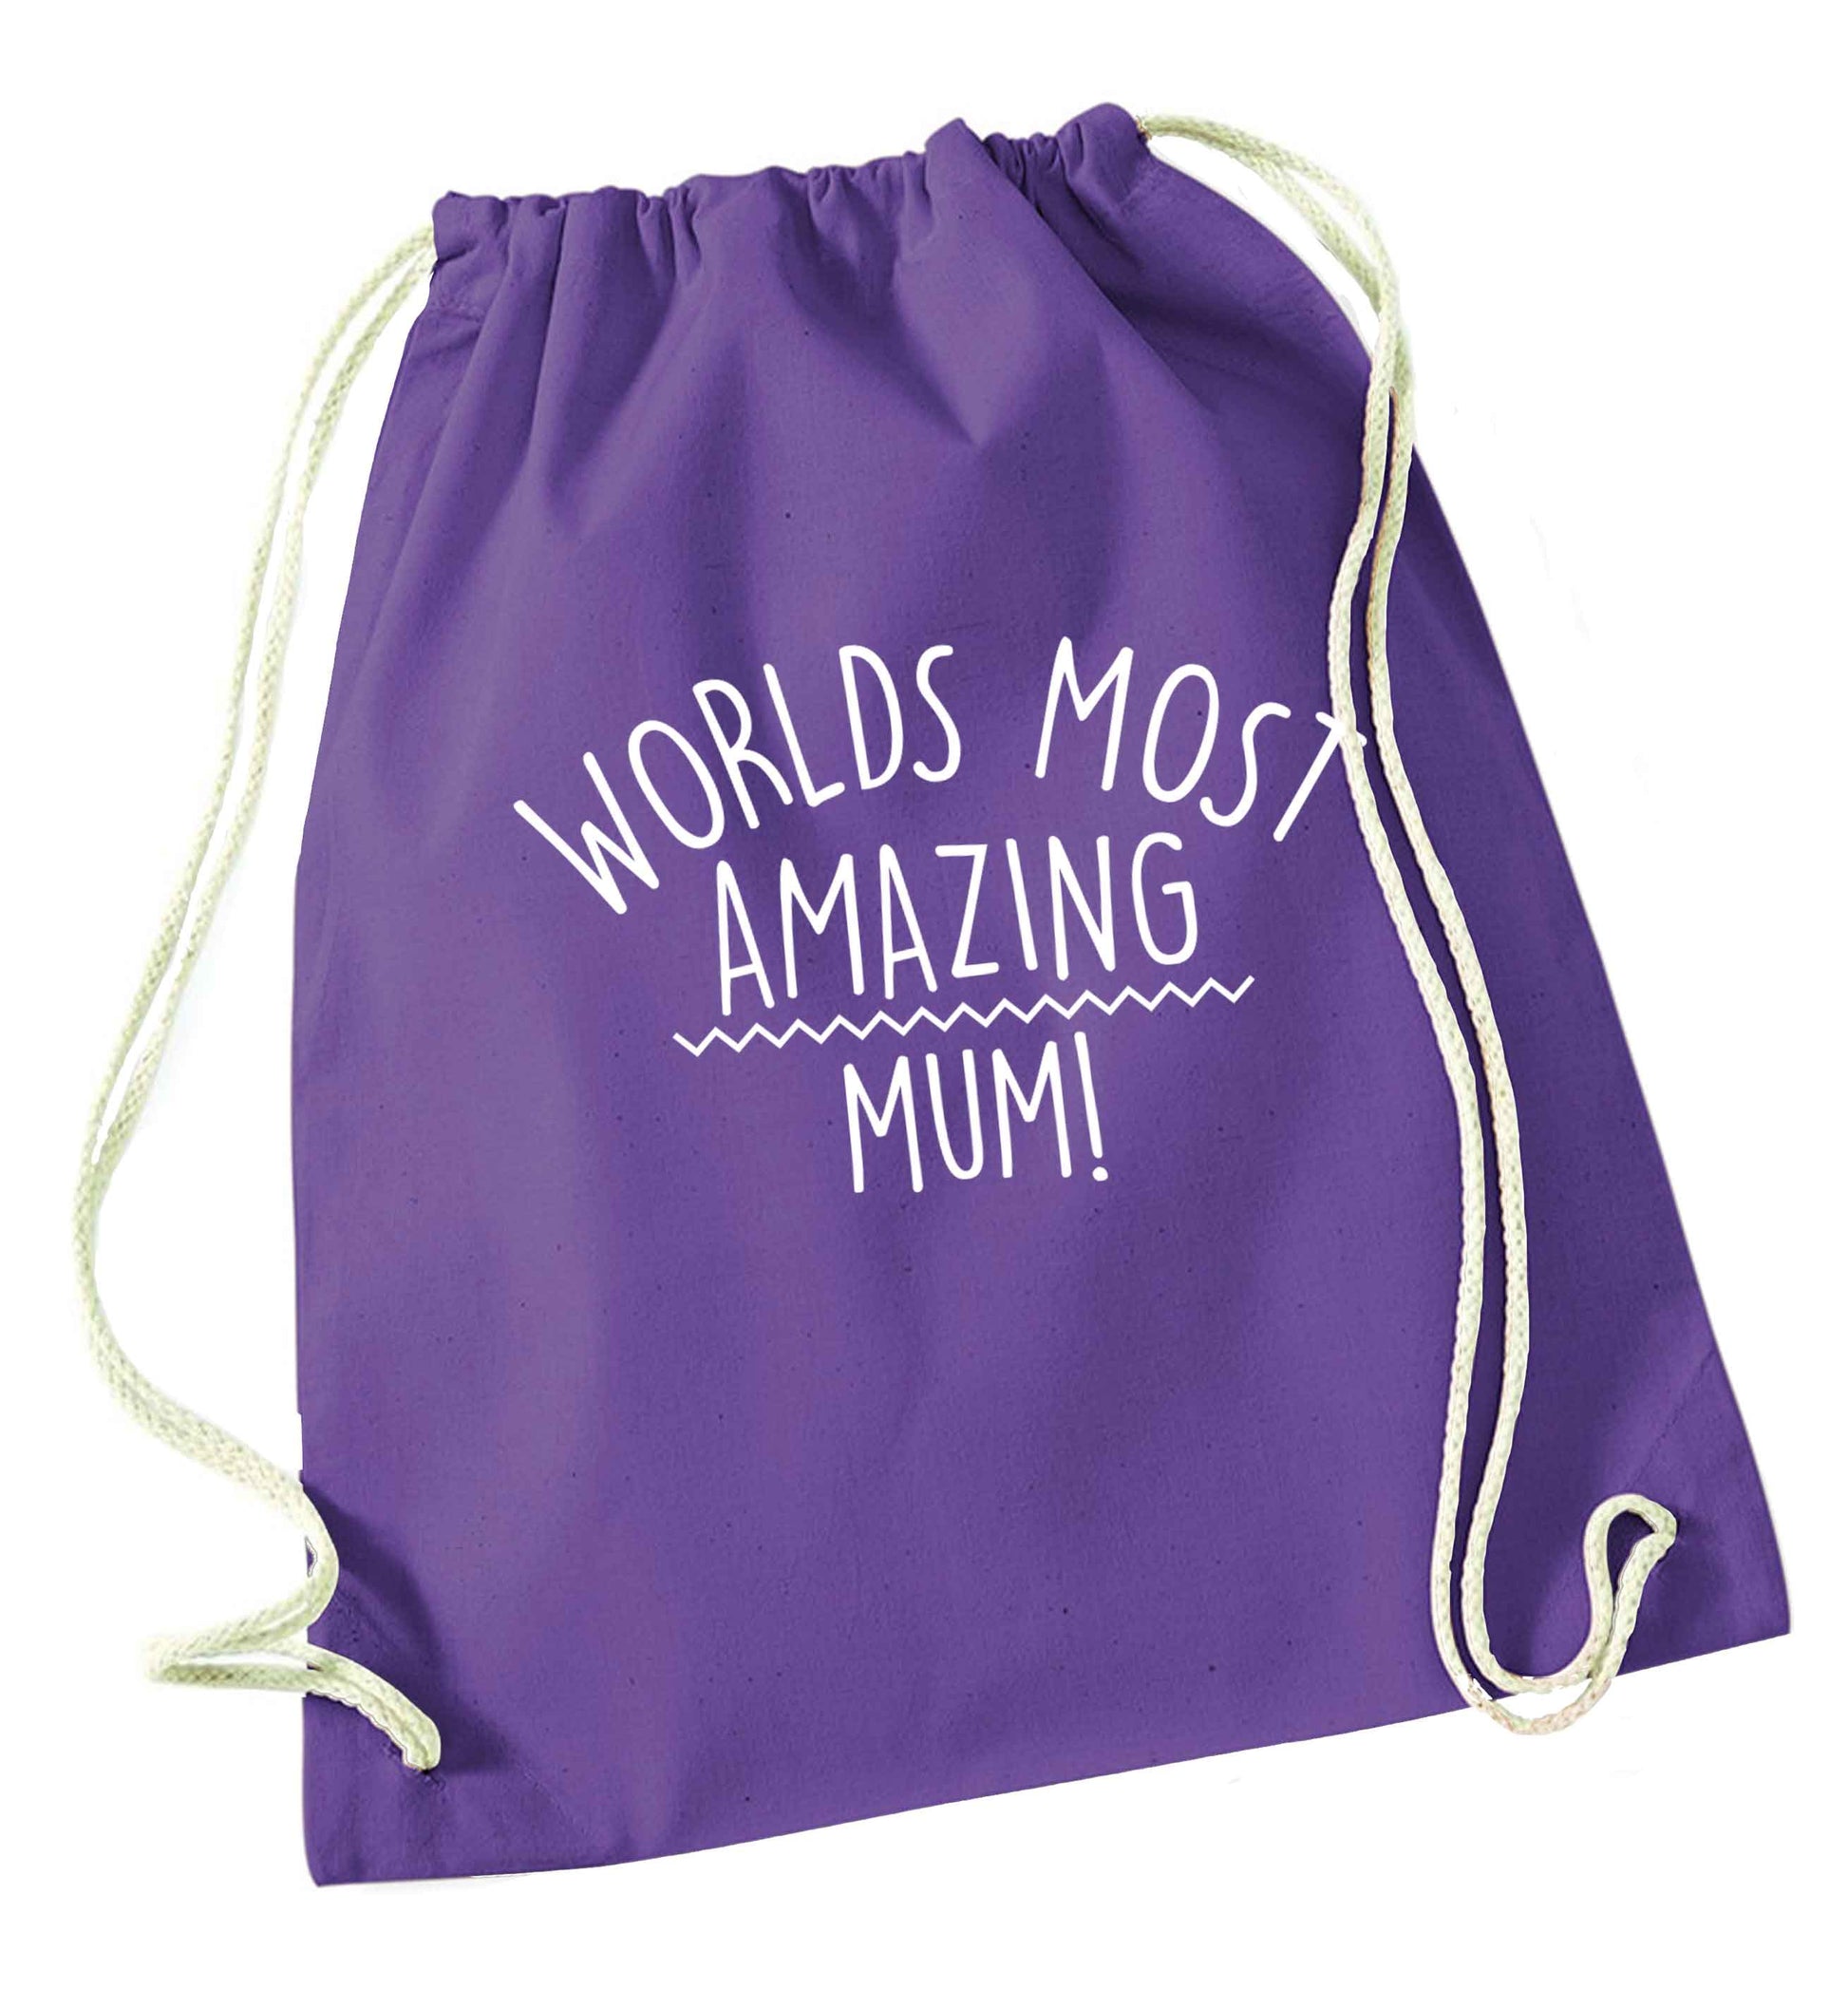 Worlds most amazing mum purple drawstring bag